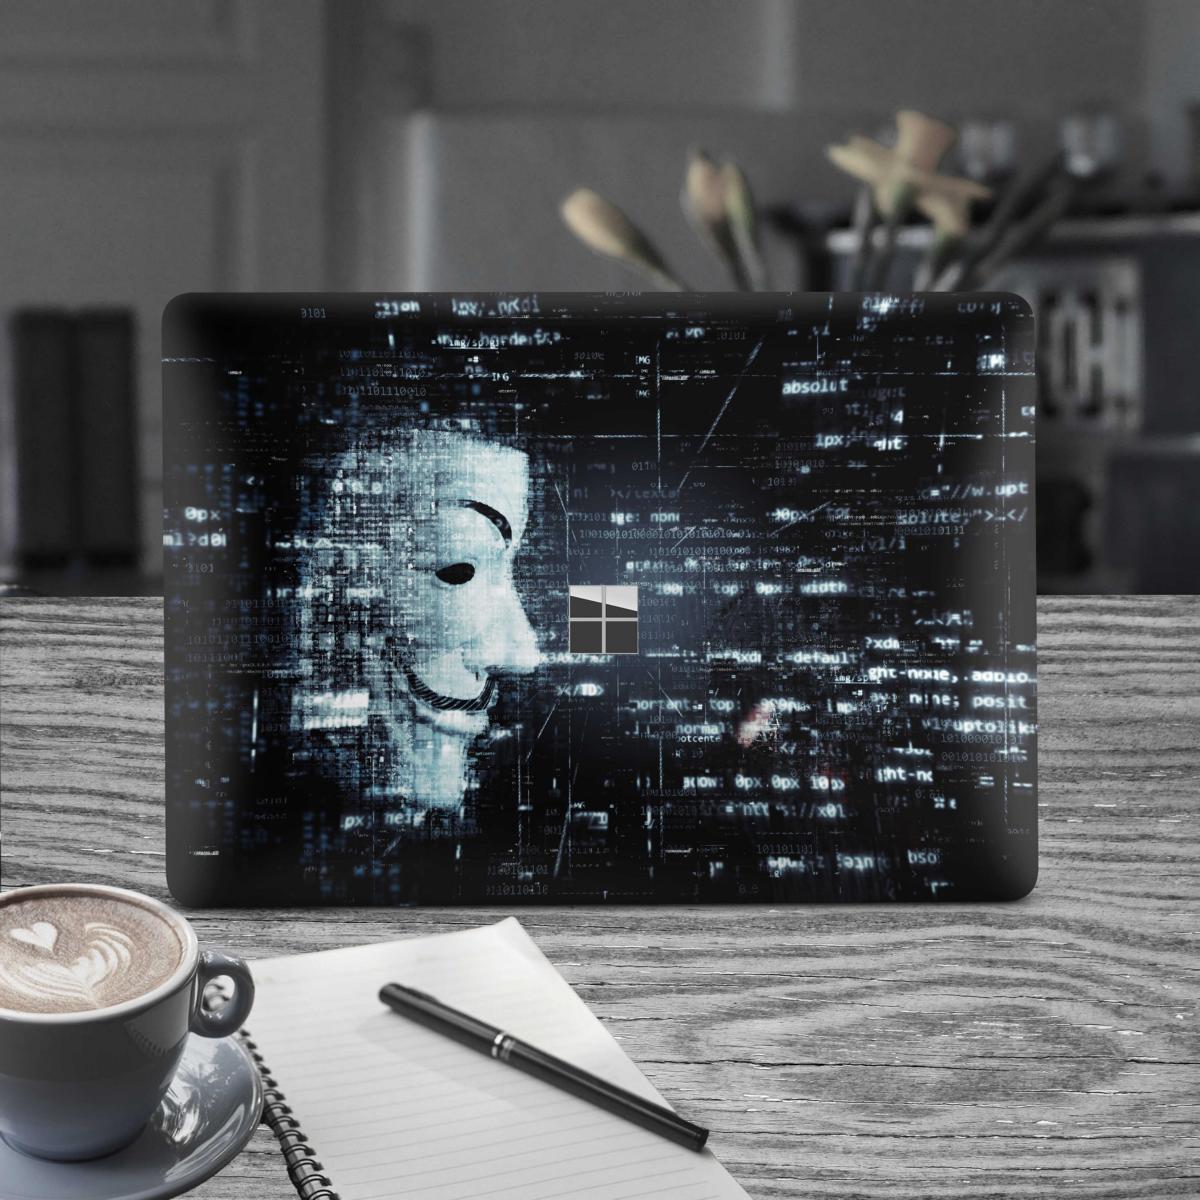 Microsoft Surface Book 2 Skin 15" Premium Vinylfolie Kratzerschutz Design Anonymous Elektronik-Sticker & -Aufkleber Skins4u   